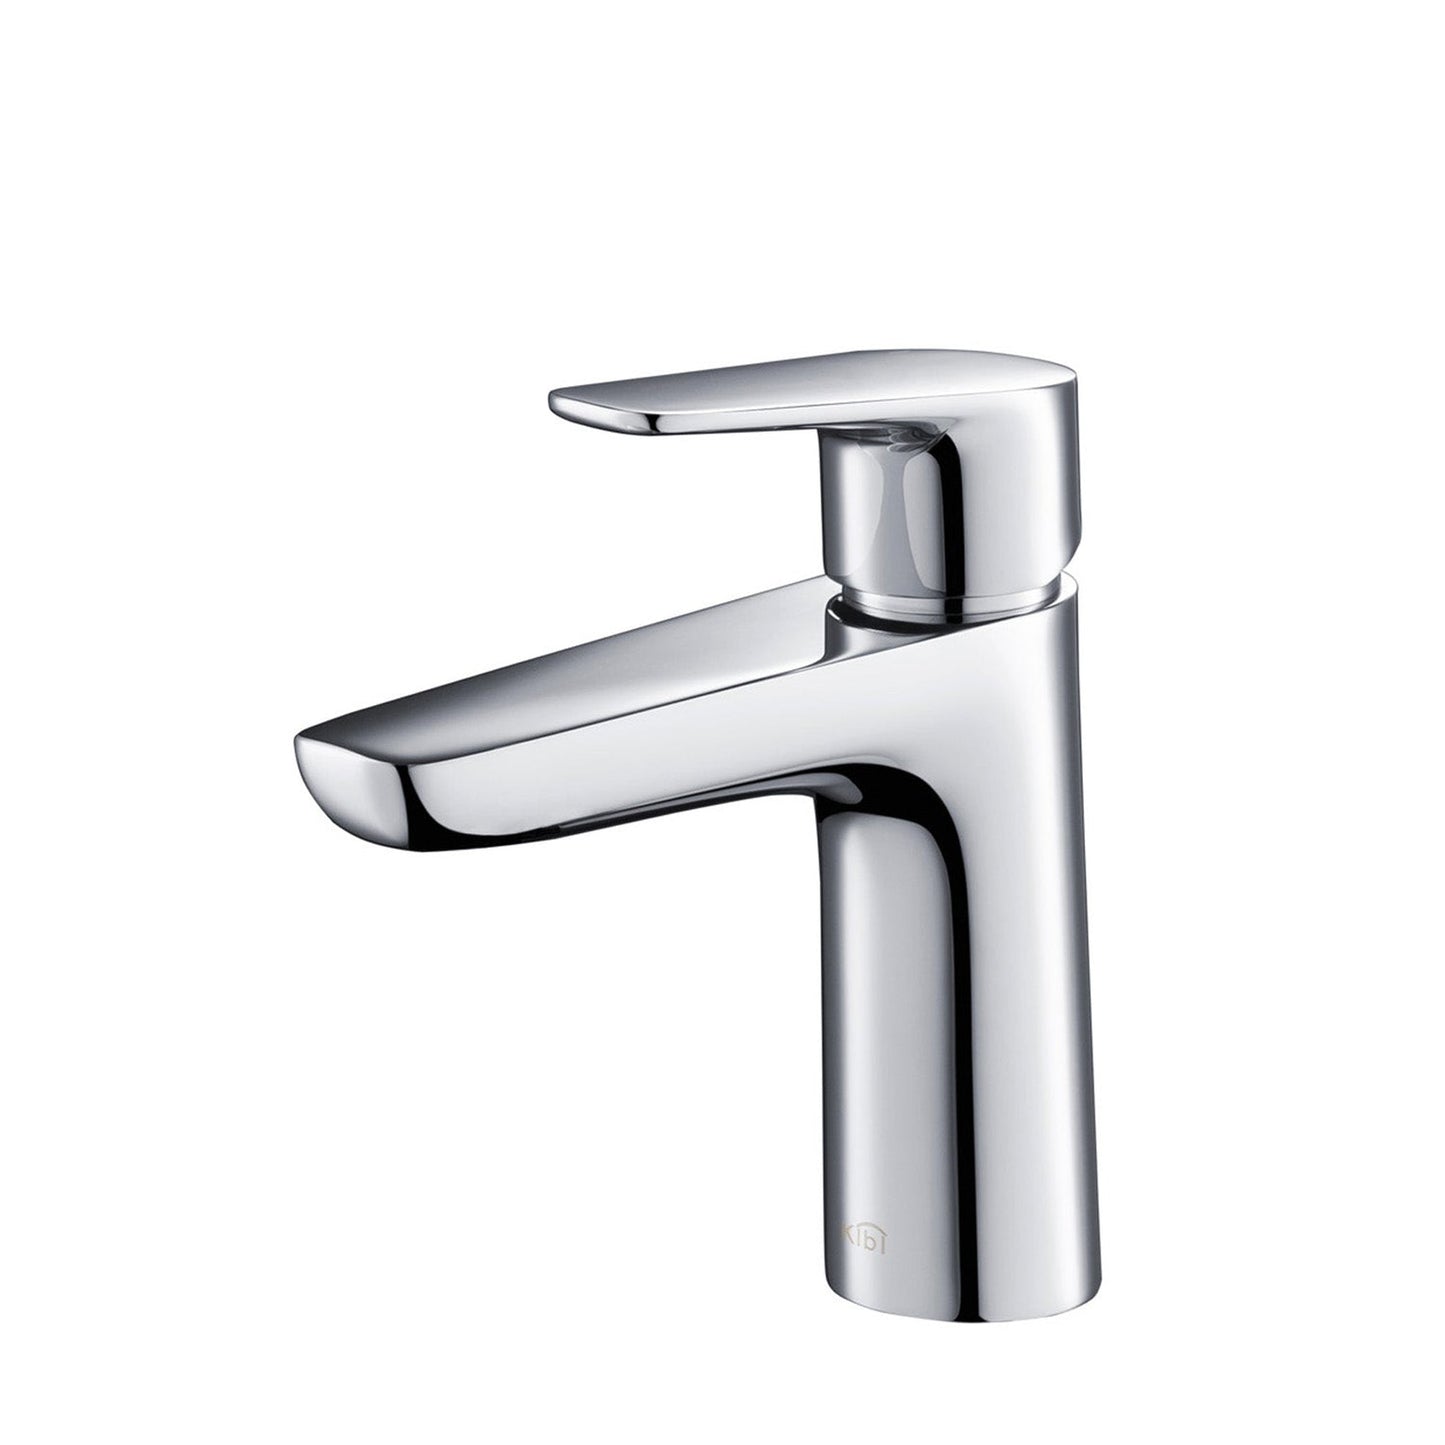 KIBI Harmony Single Handle Chrome Solid Brass Bathroom Sink Faucet